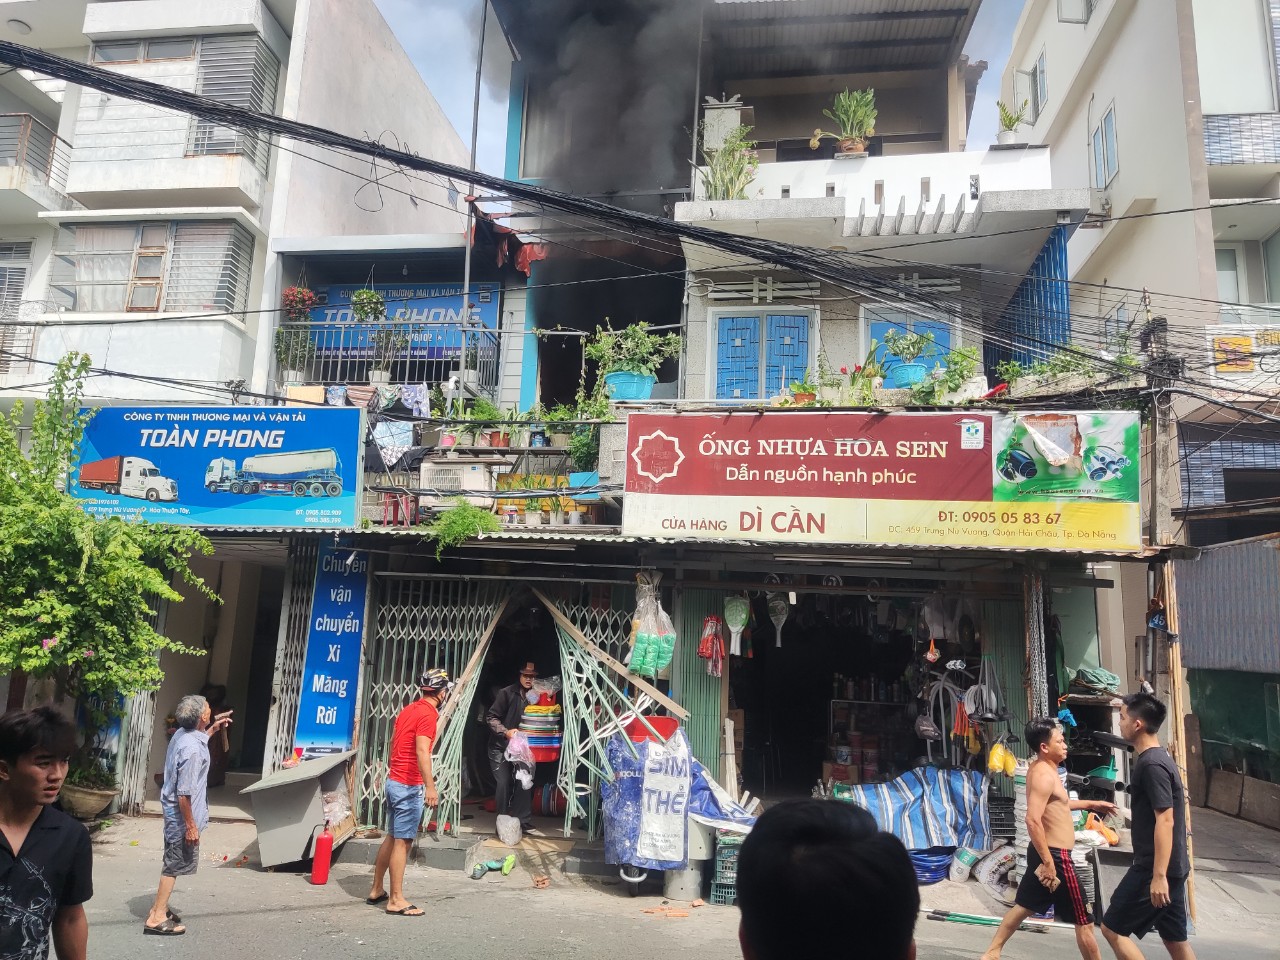 Woman, 2 children die in house fire in Da Nang